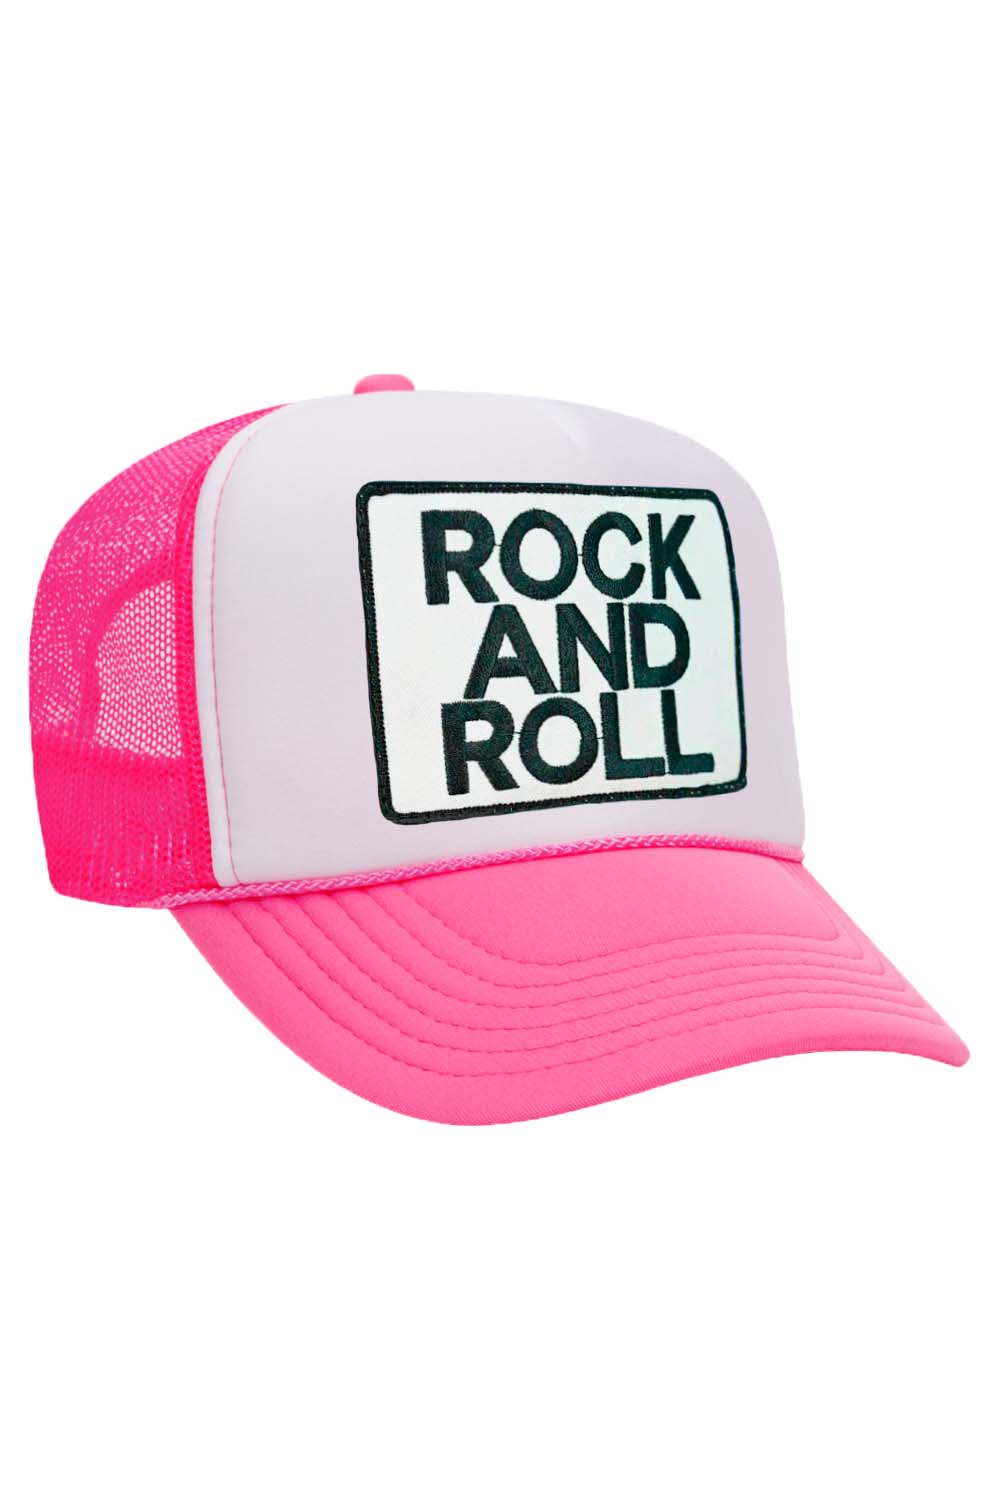 ROCK &amp; ROLL VINTAGE TRUCKER HAT HATS Aviator Nation OS NEON PINK / WHITE / NEON PINK 